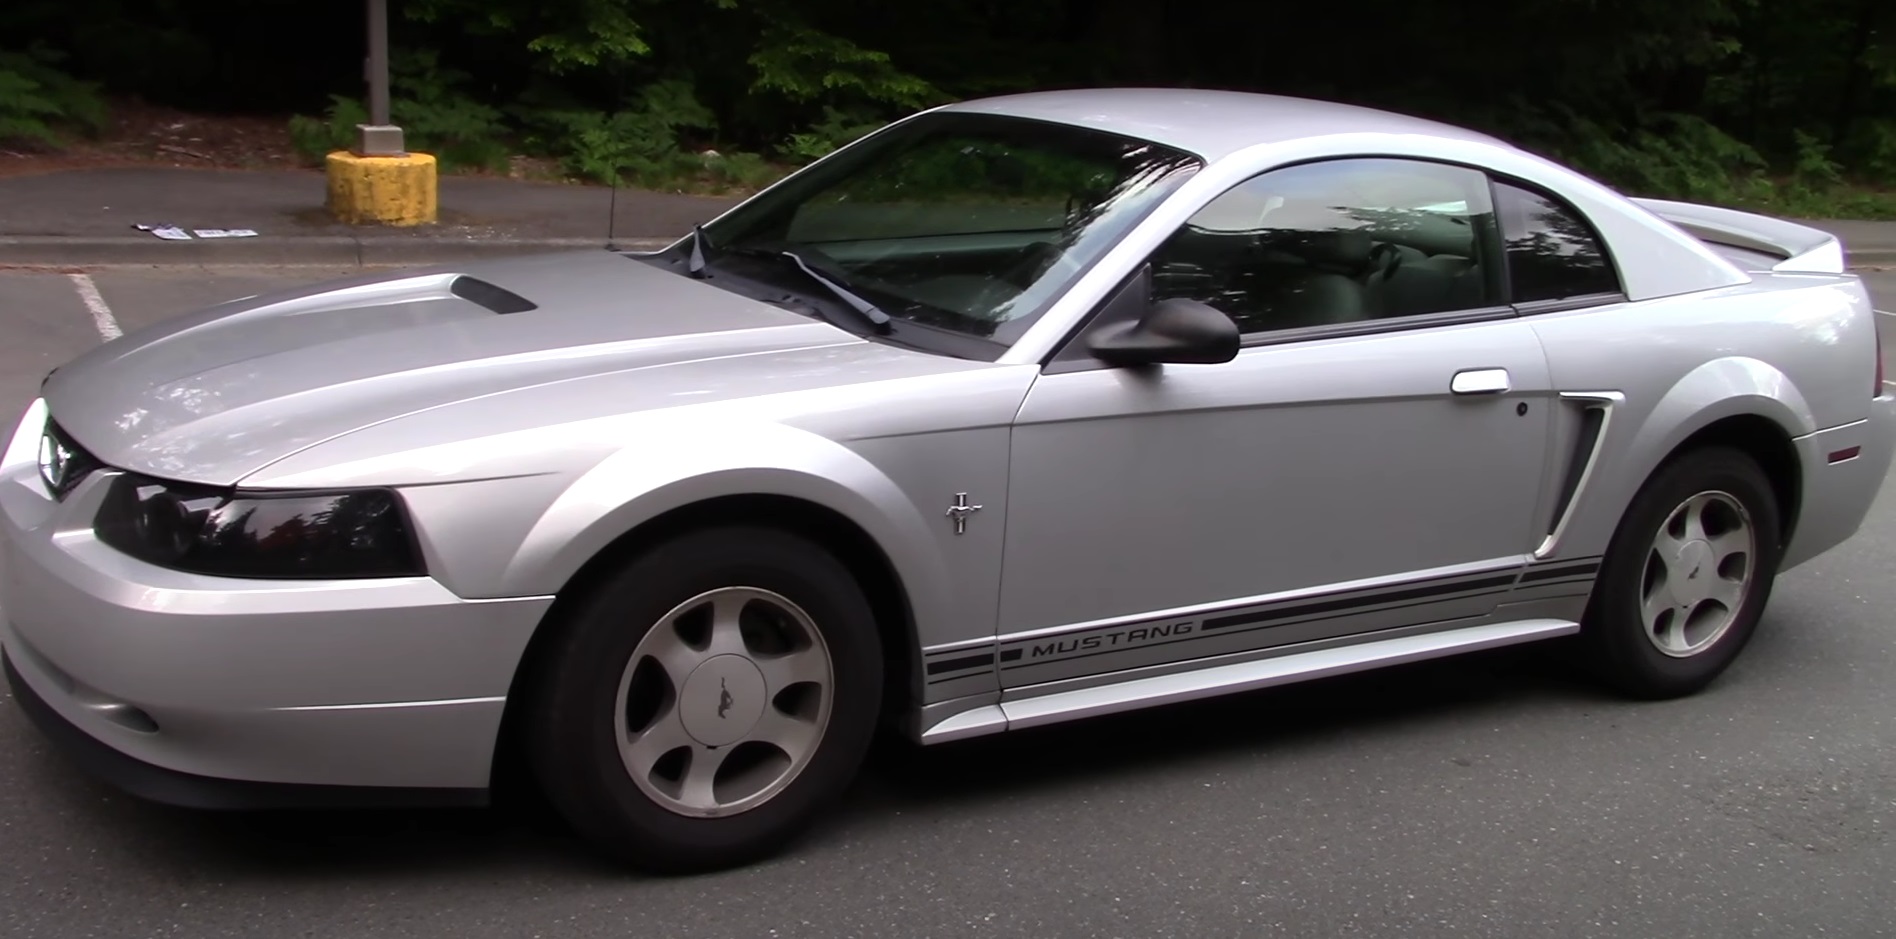 Video: 2000 Ford Mustang In-Depth Look